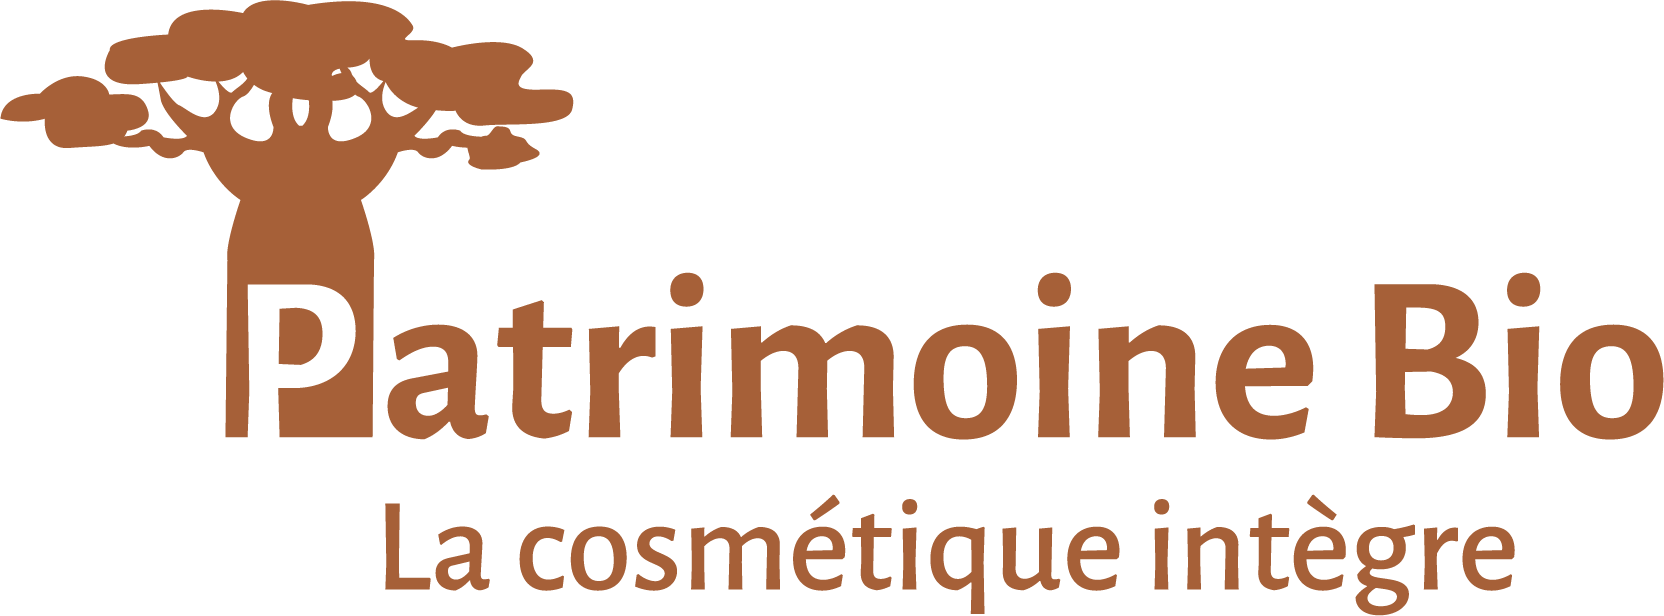 Patrimoine Bio logo